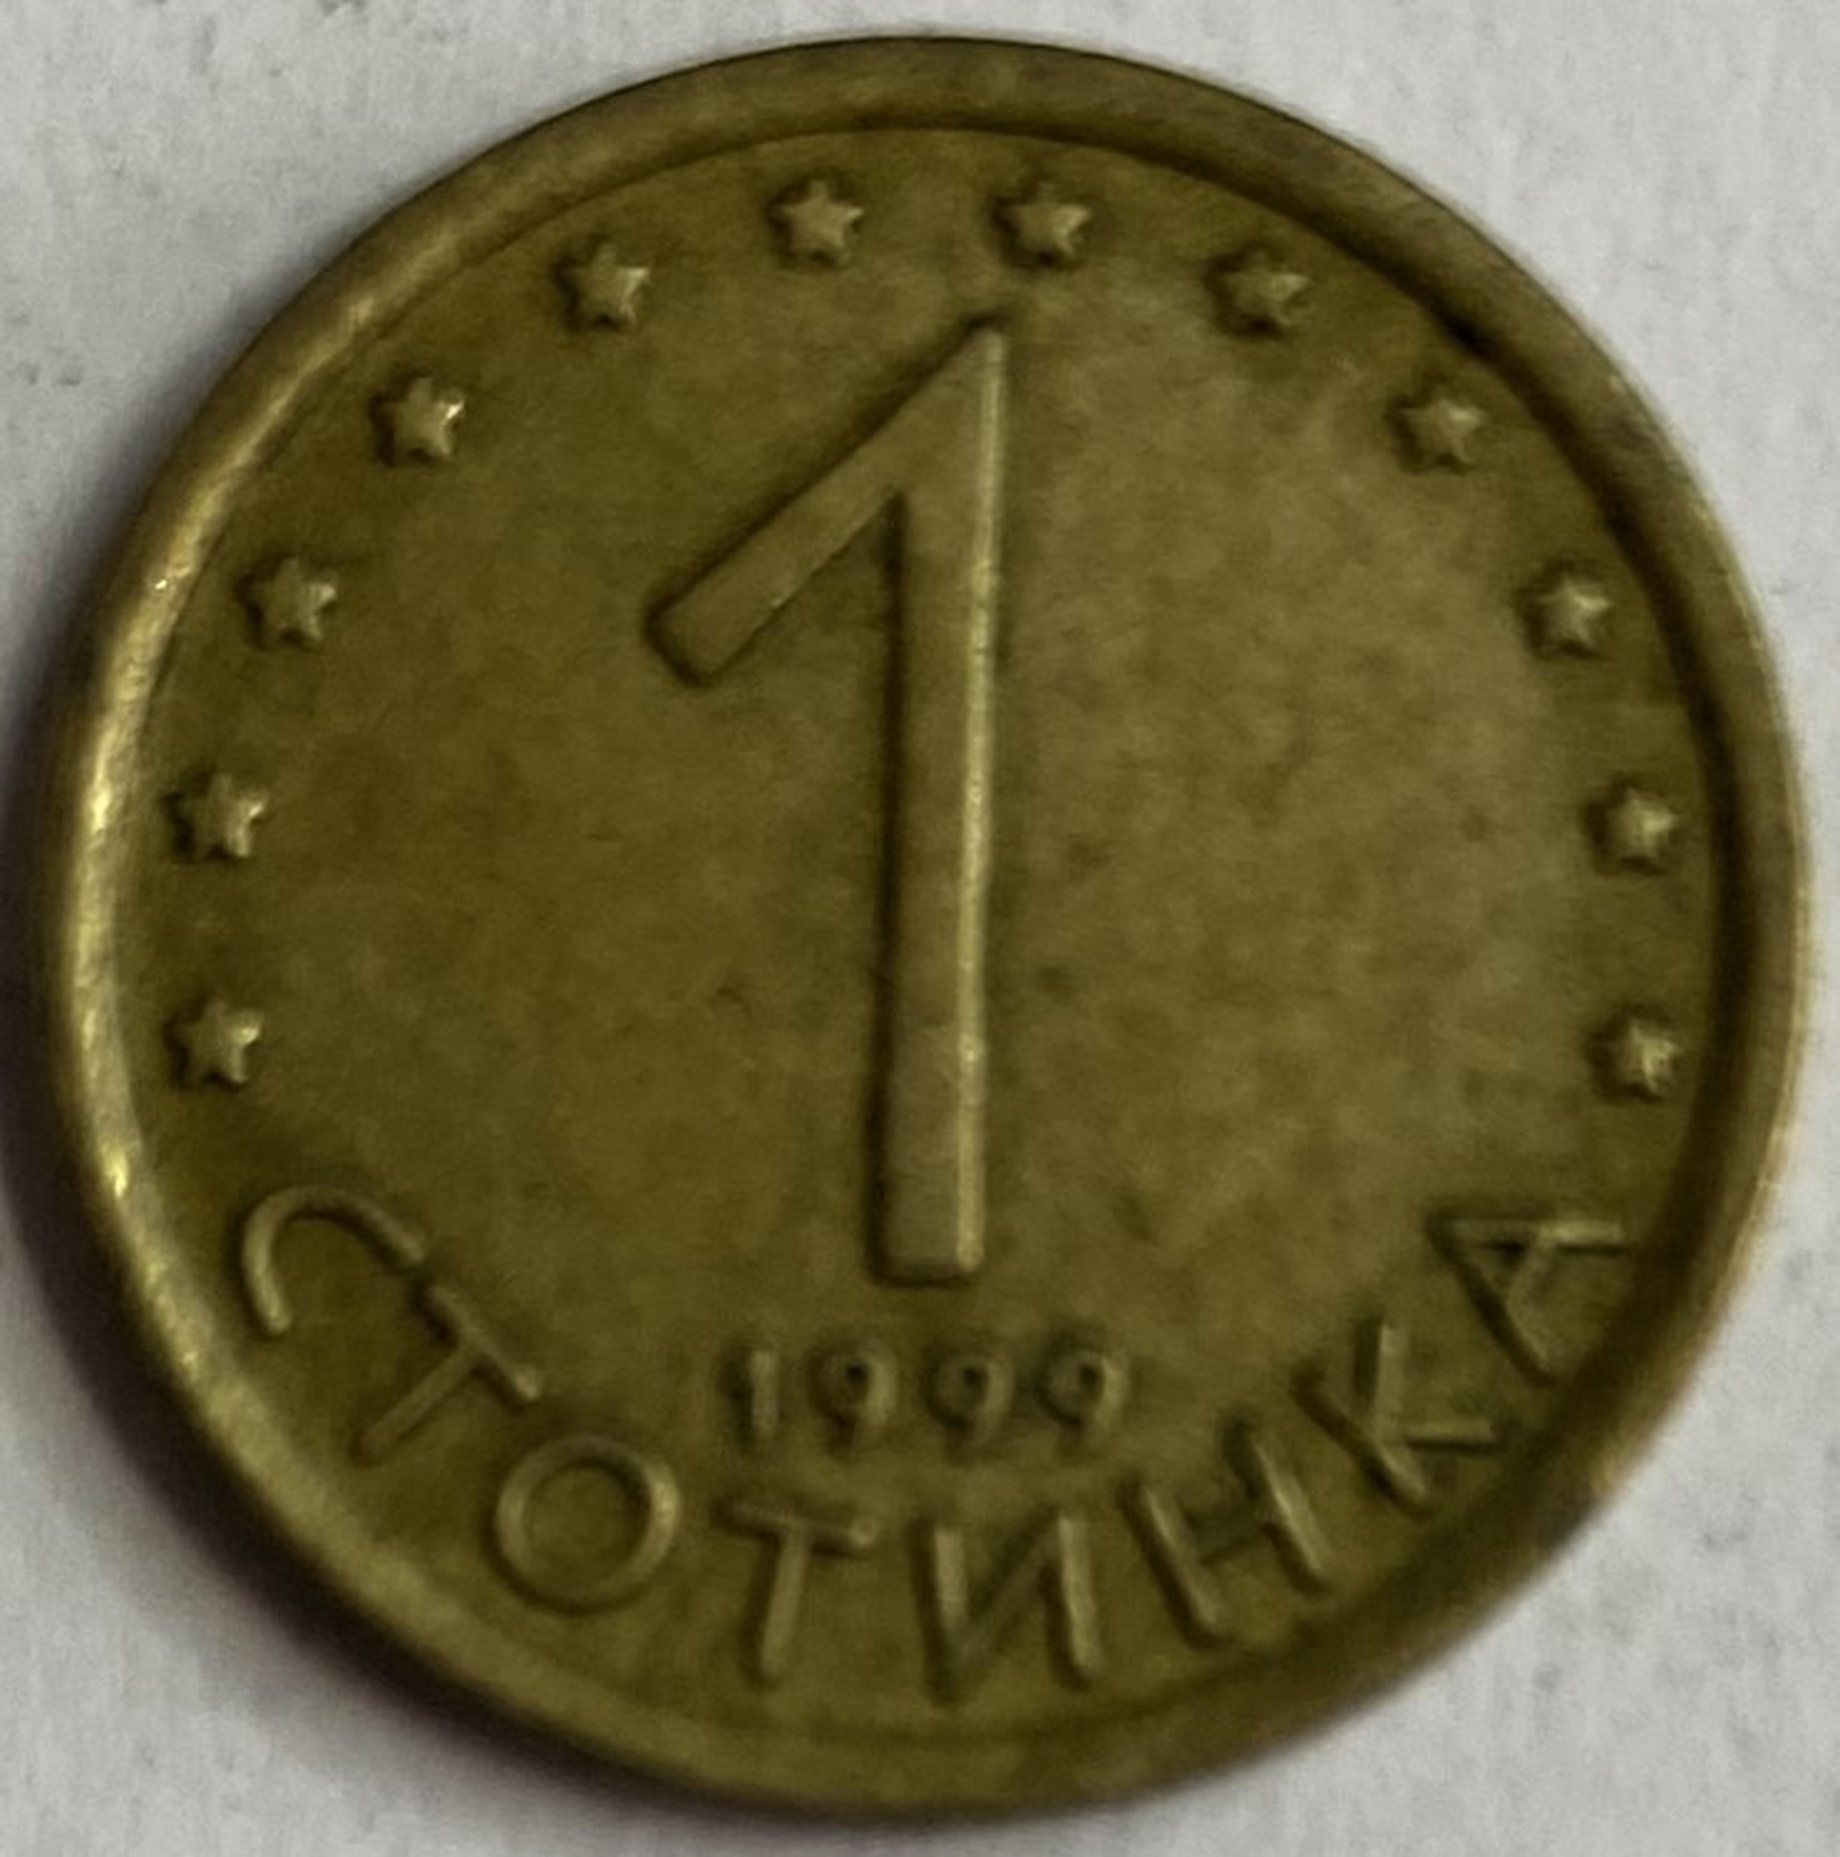 Иностранная монета 1 стотинка 1999 год Болгария